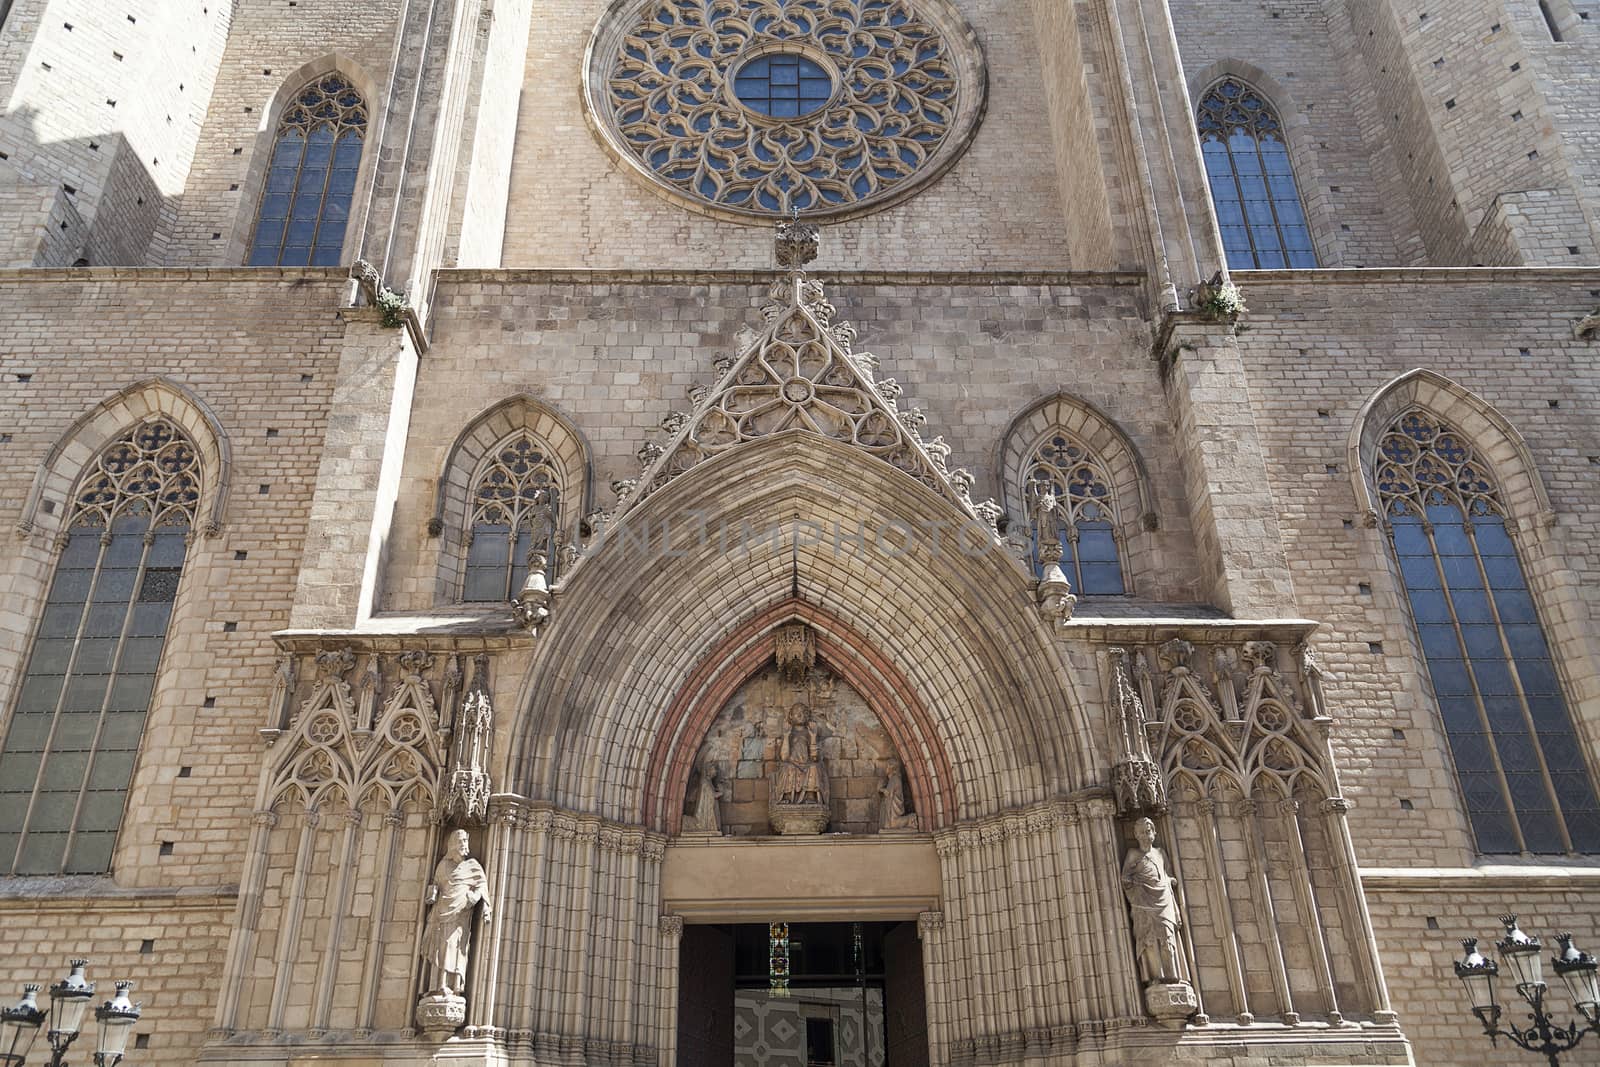 Facade of Catalan Gothic church Santa Maria del Mar, Barcelona, Spain.